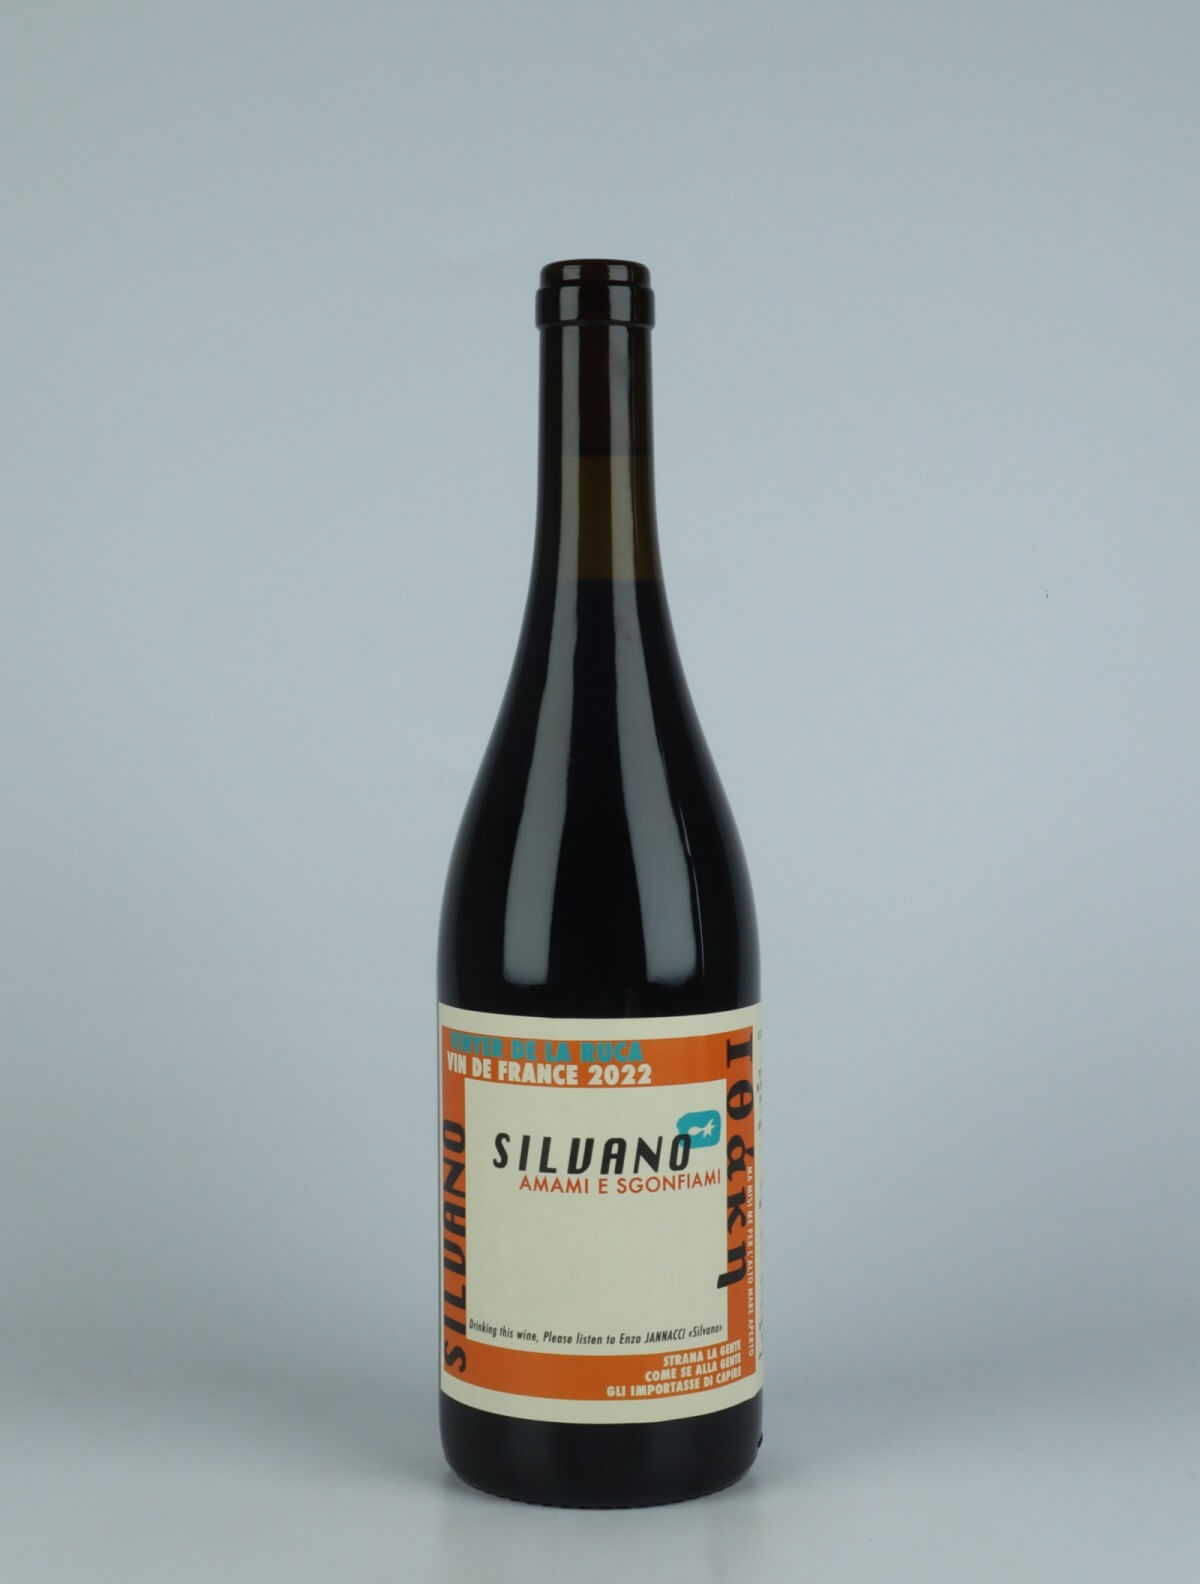 A bottle 2022 Silvano Red wine from Vinyer de la Ruca, Rousillon in France